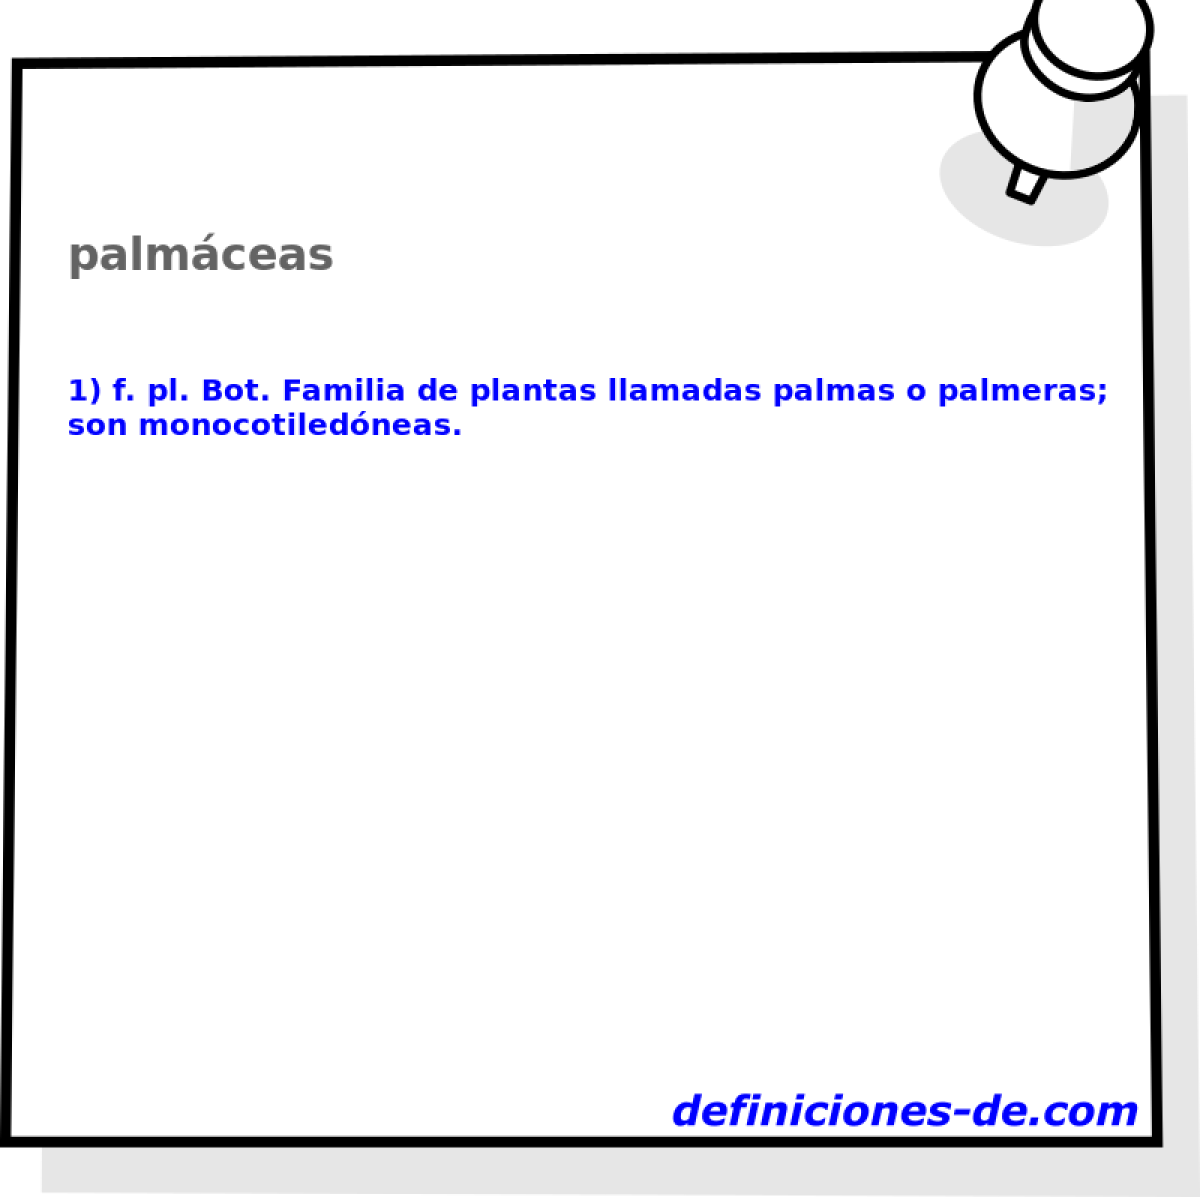 palmceas 